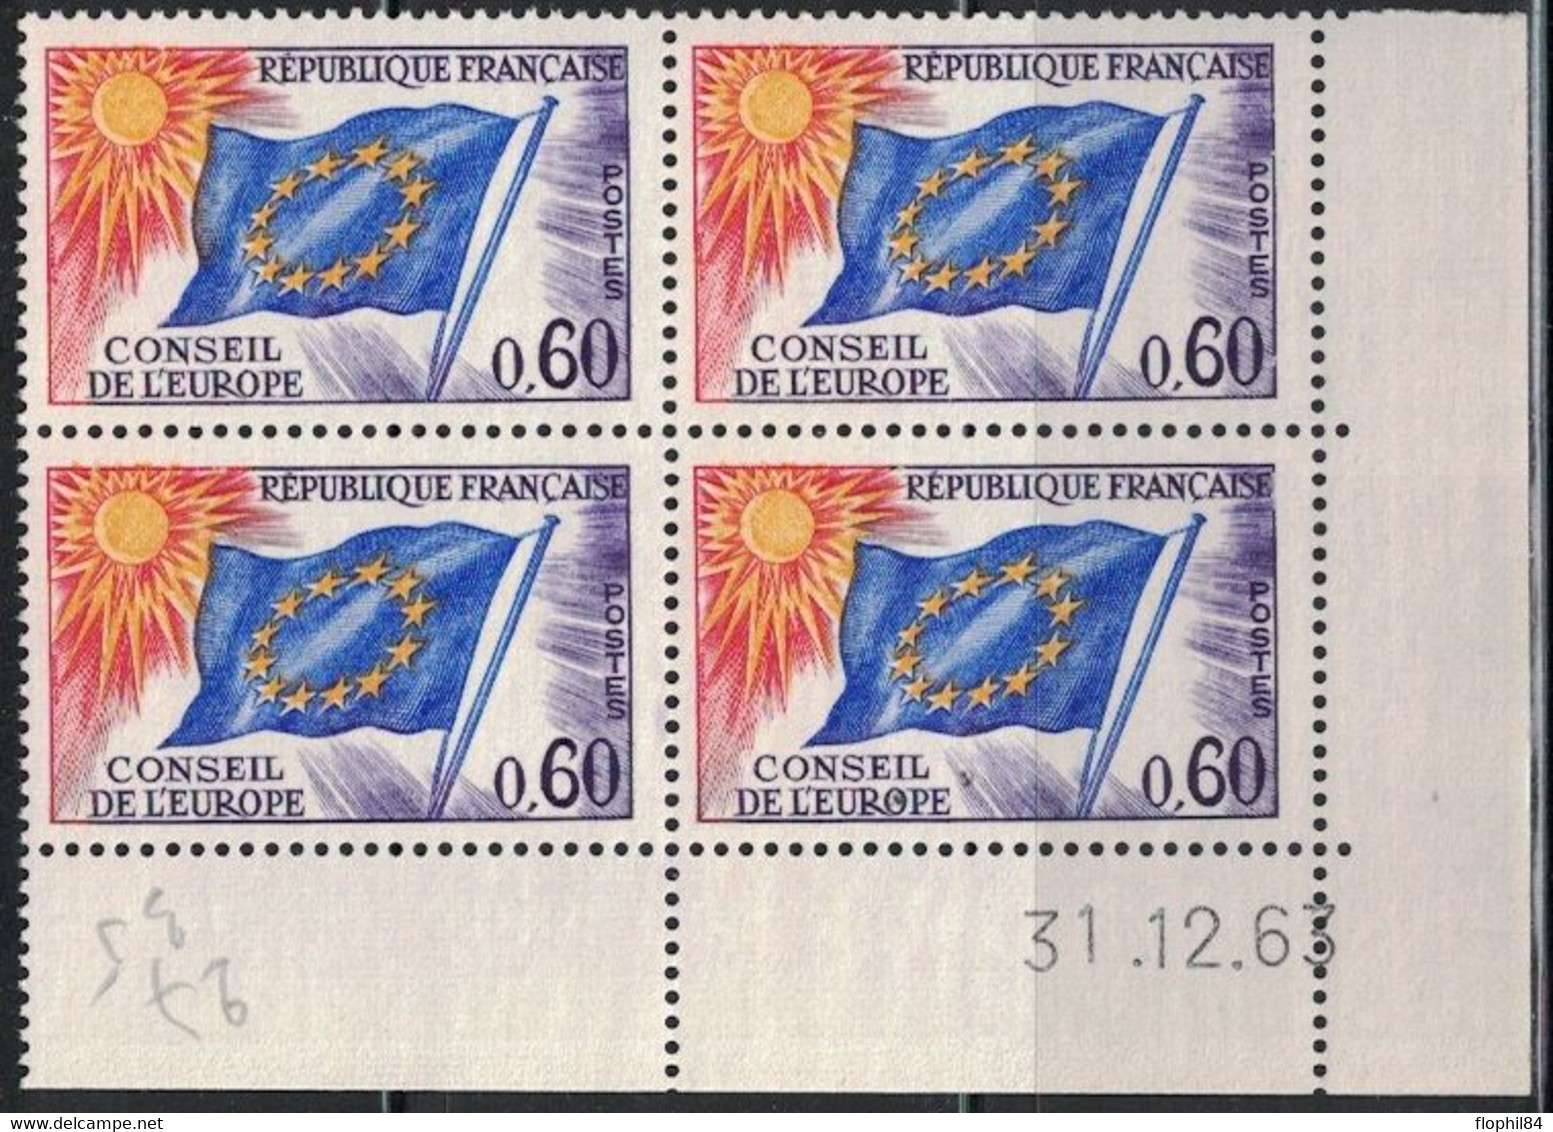 COIN DATE - SERVICE N°34 - 0f60 - CONSEIL DE L'EUROPE - 31-12-1963 - Cote 7€50. - Dienstzegels